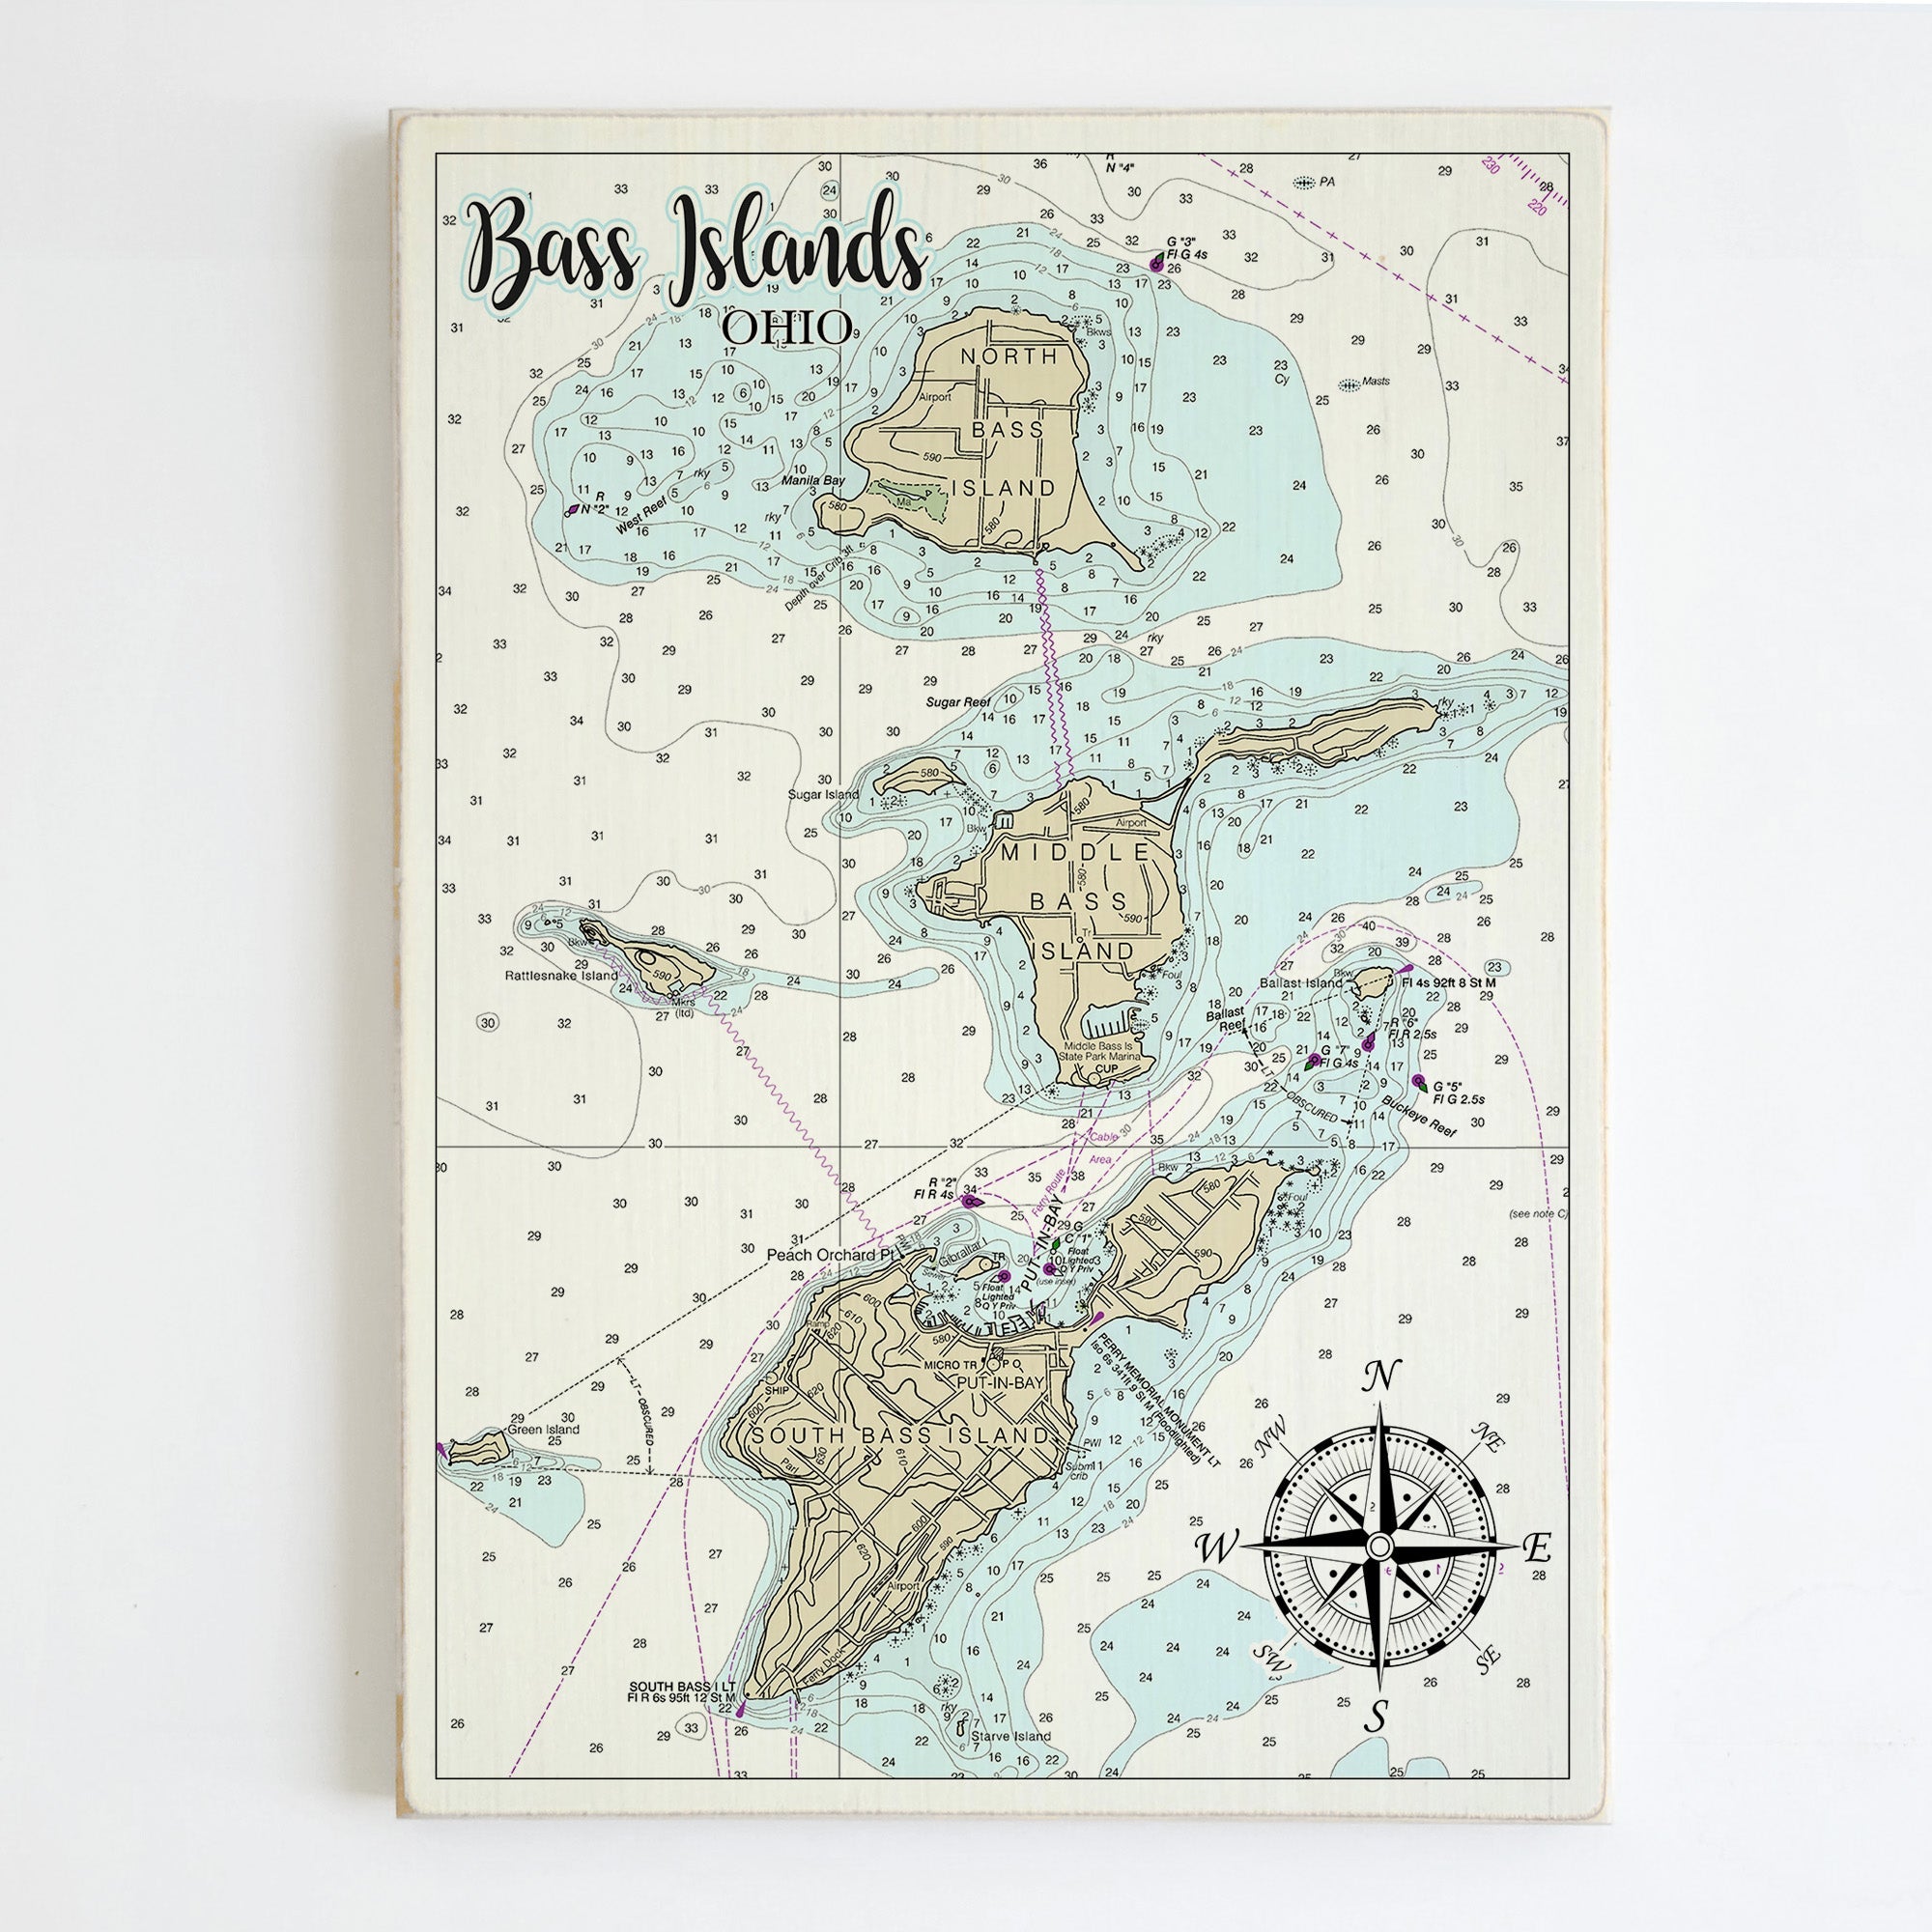 Bass Islands,  OH Plank Map